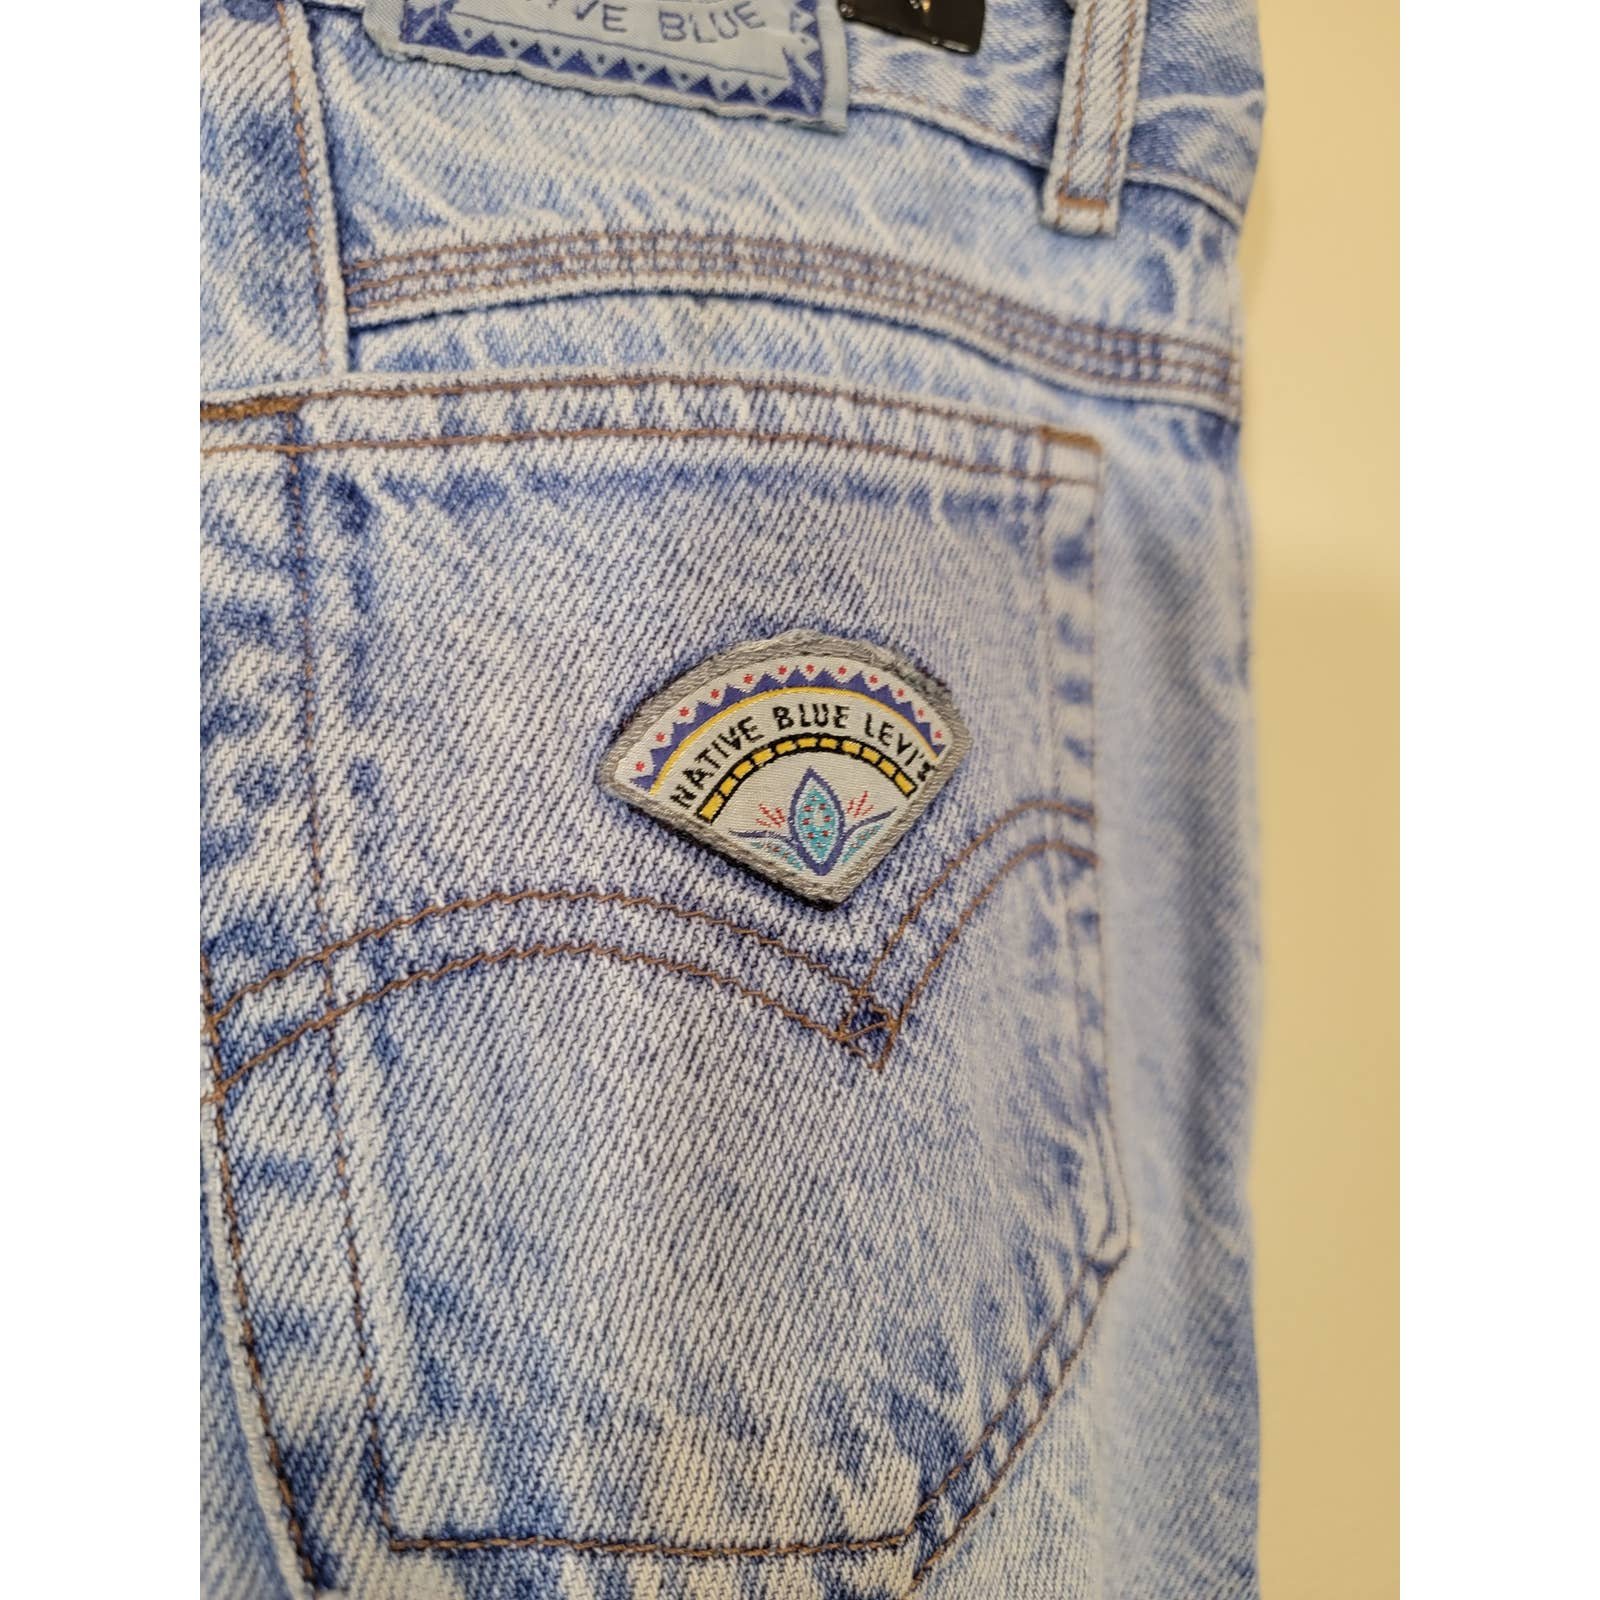 Discounted Vintage Native Blue Levi´s Back Ankle Zip Jeans Denim Light Wash Blue Size 28?? hBEITbAG7 High Quaity